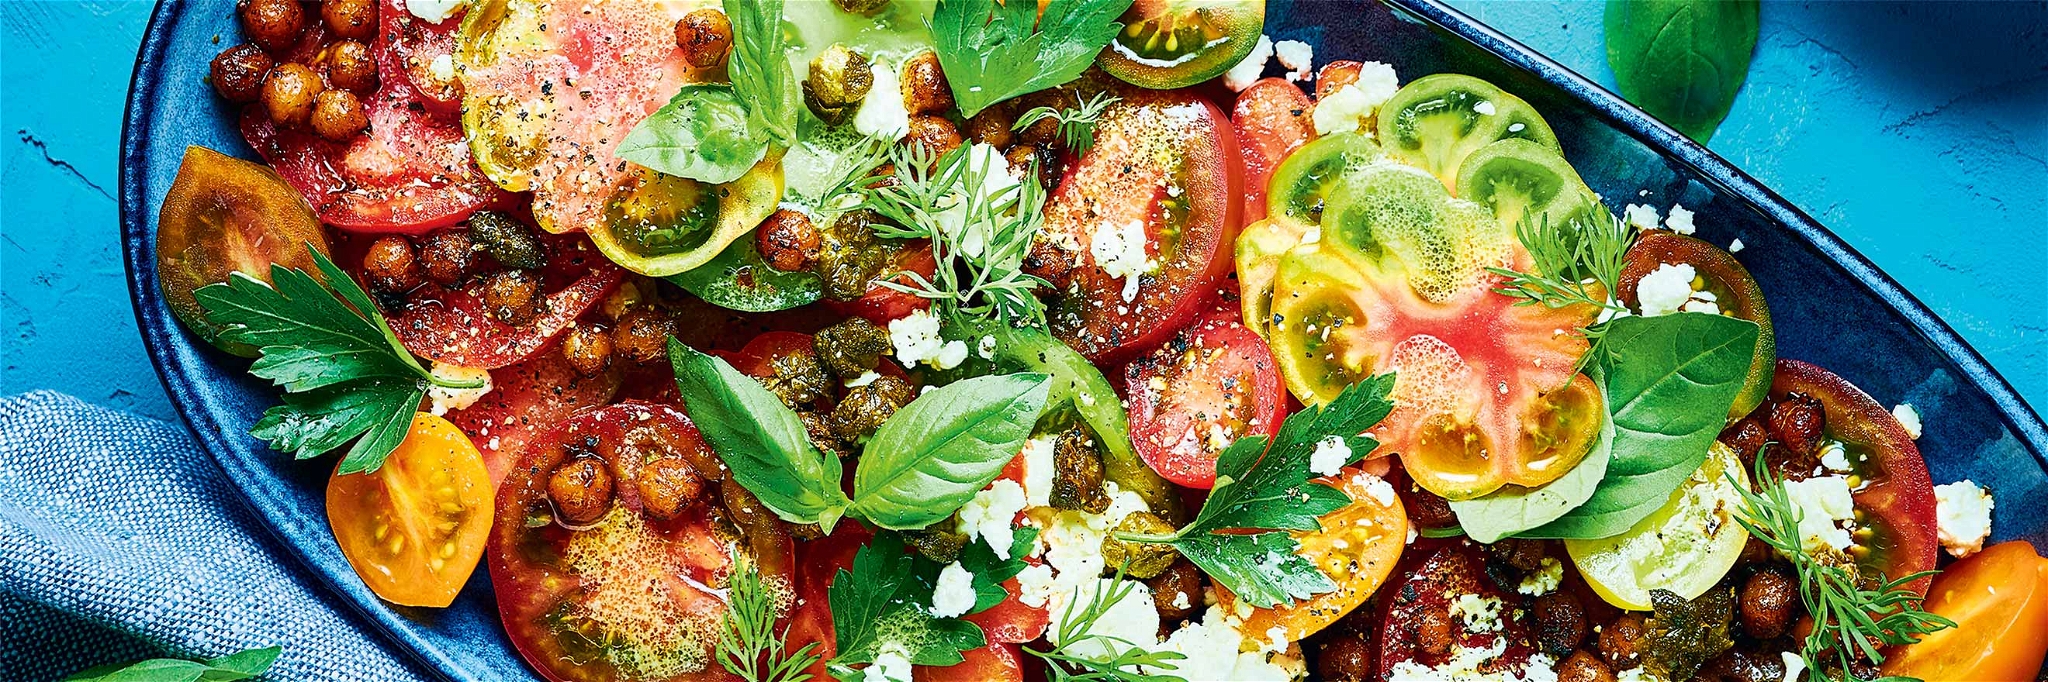 Fresh and tasty tomato salad.&nbsp;